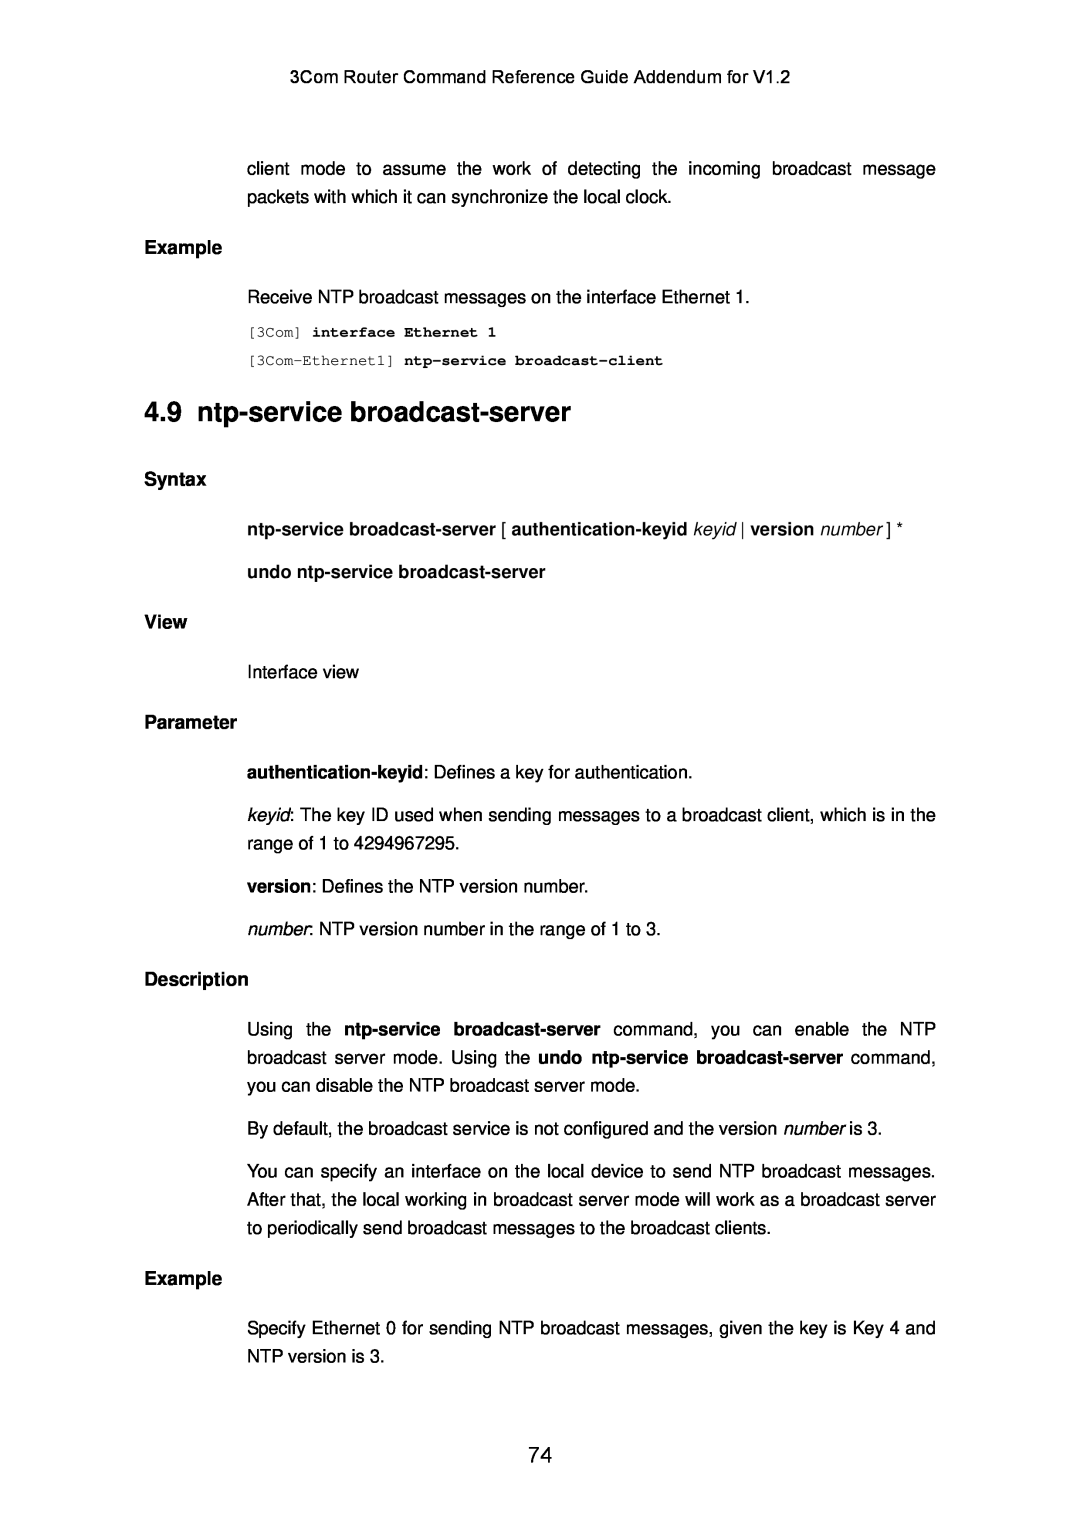 3Com 10014302 manual ntp-service broadcast-server, Example, Syntax, View, Parameter, Description 